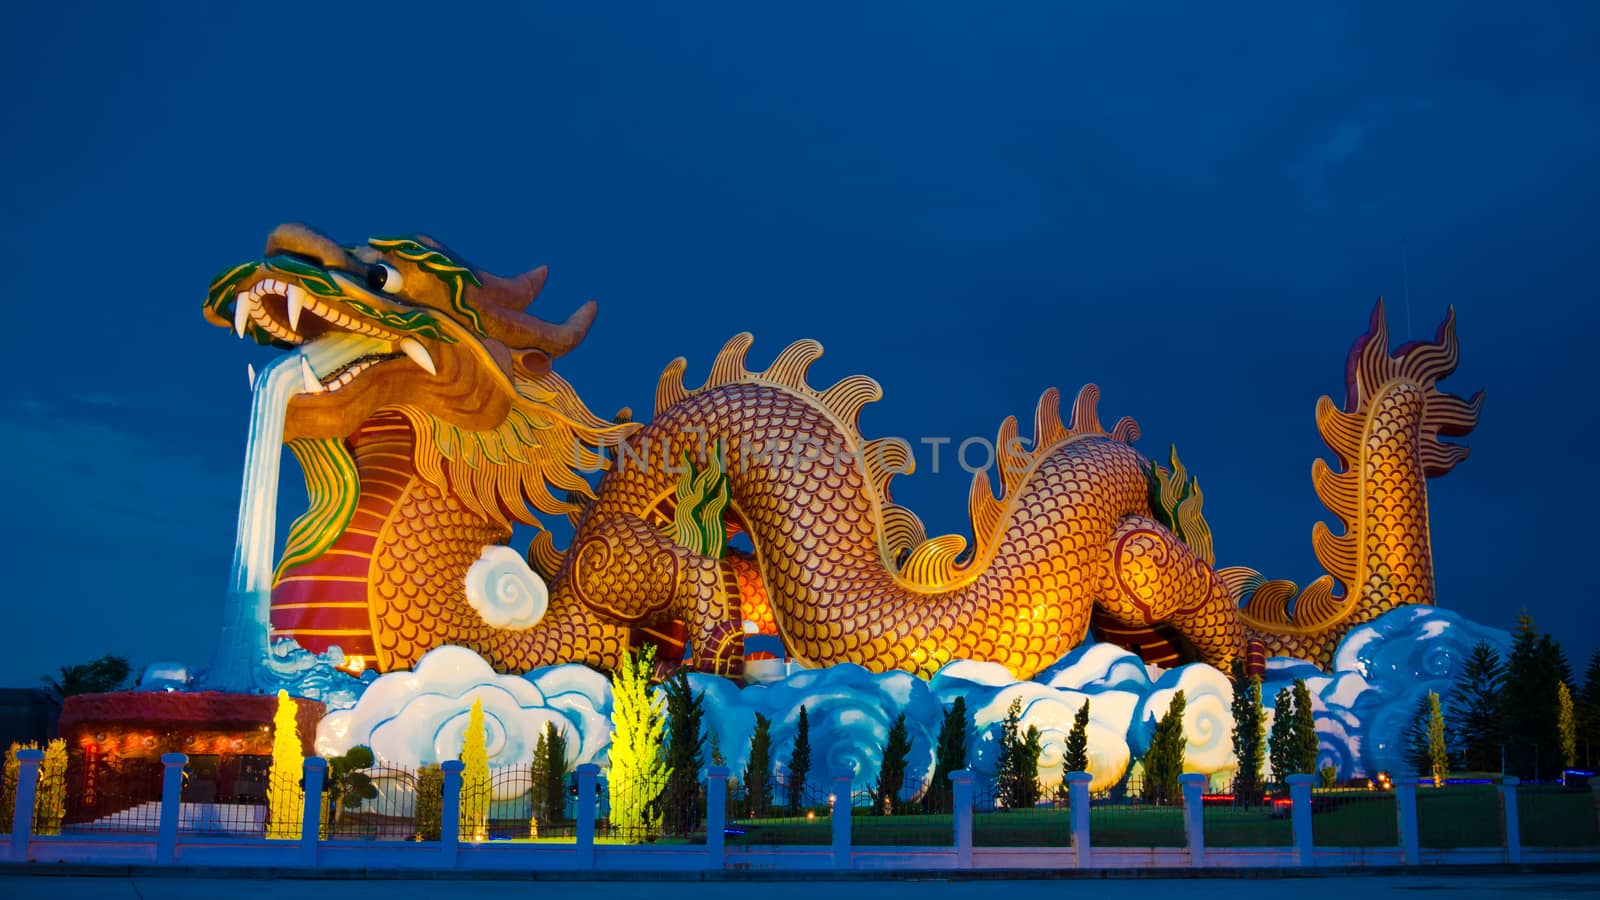 Big dragon statue at night, Supanburi Thailand